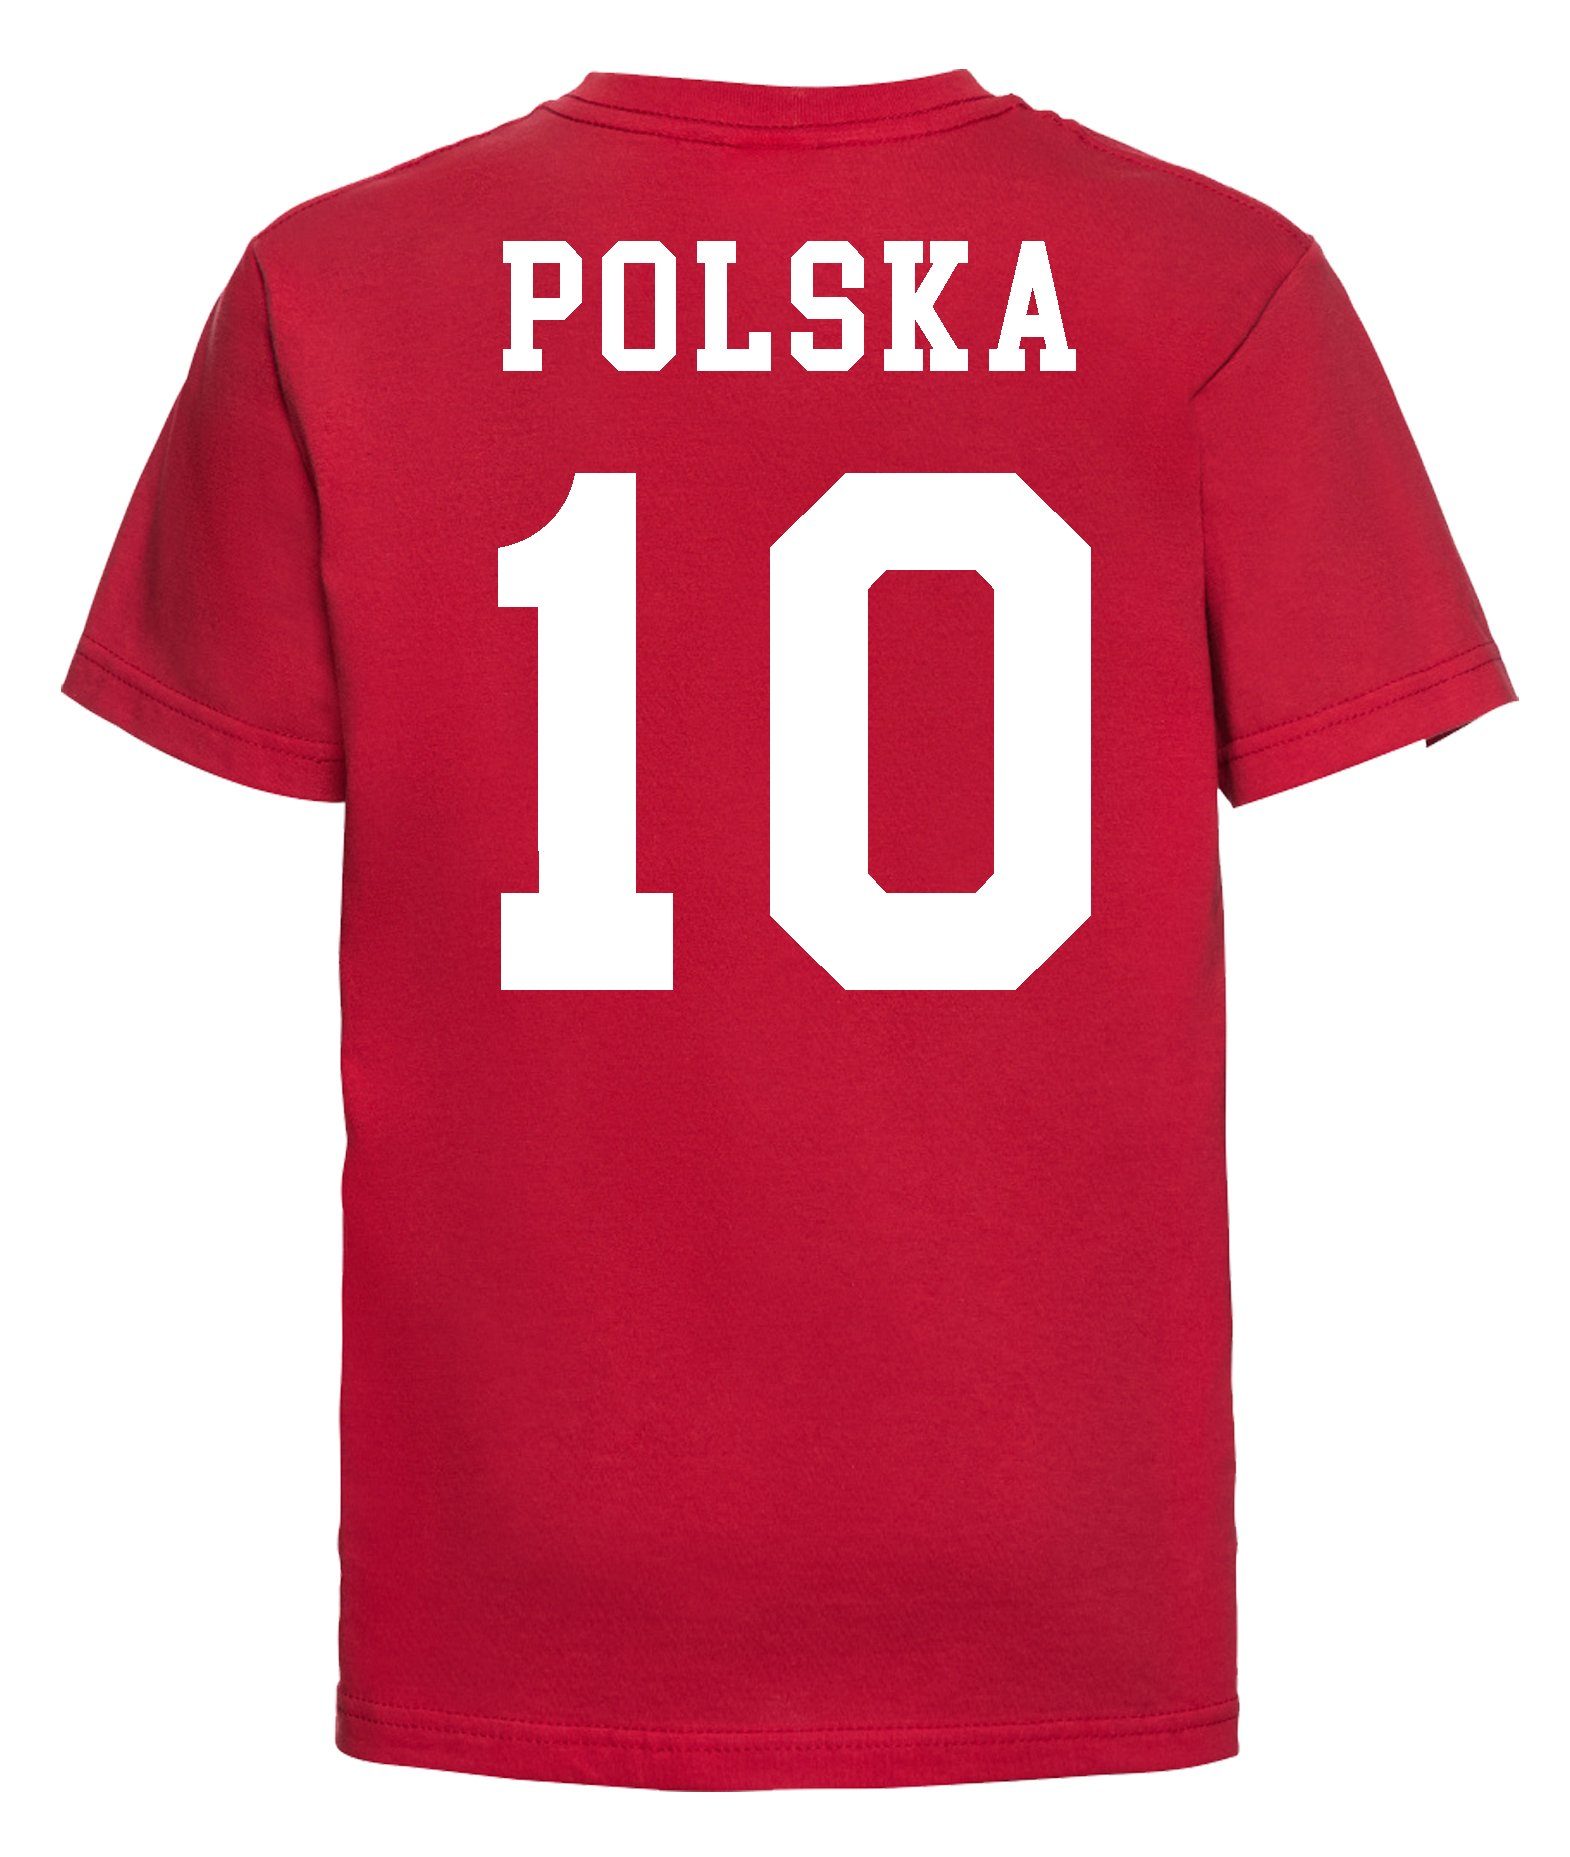 trendigem Look Trikot Polen im mit Rot T-Shirt Designz Fußball Motiv Kinder Youth T-Shirt